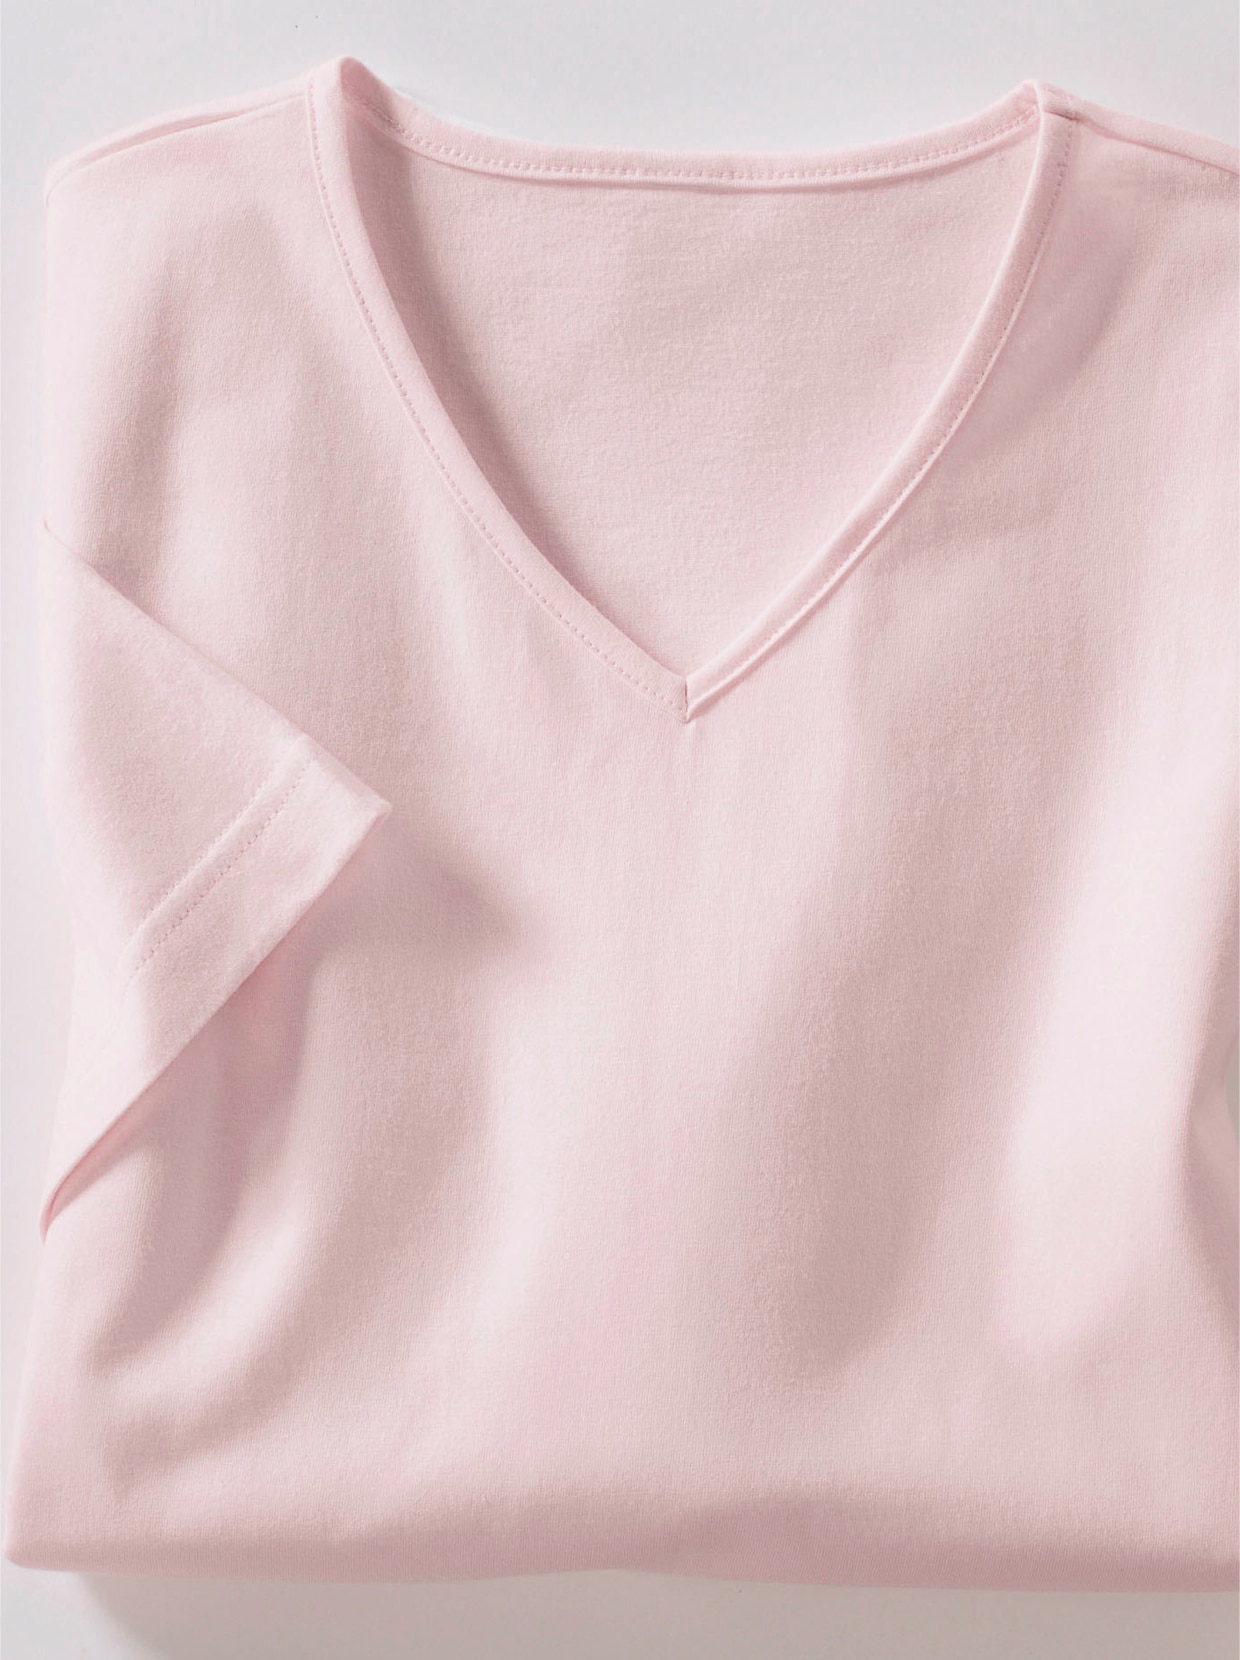 Tričko s krátkým rukávem - růžová